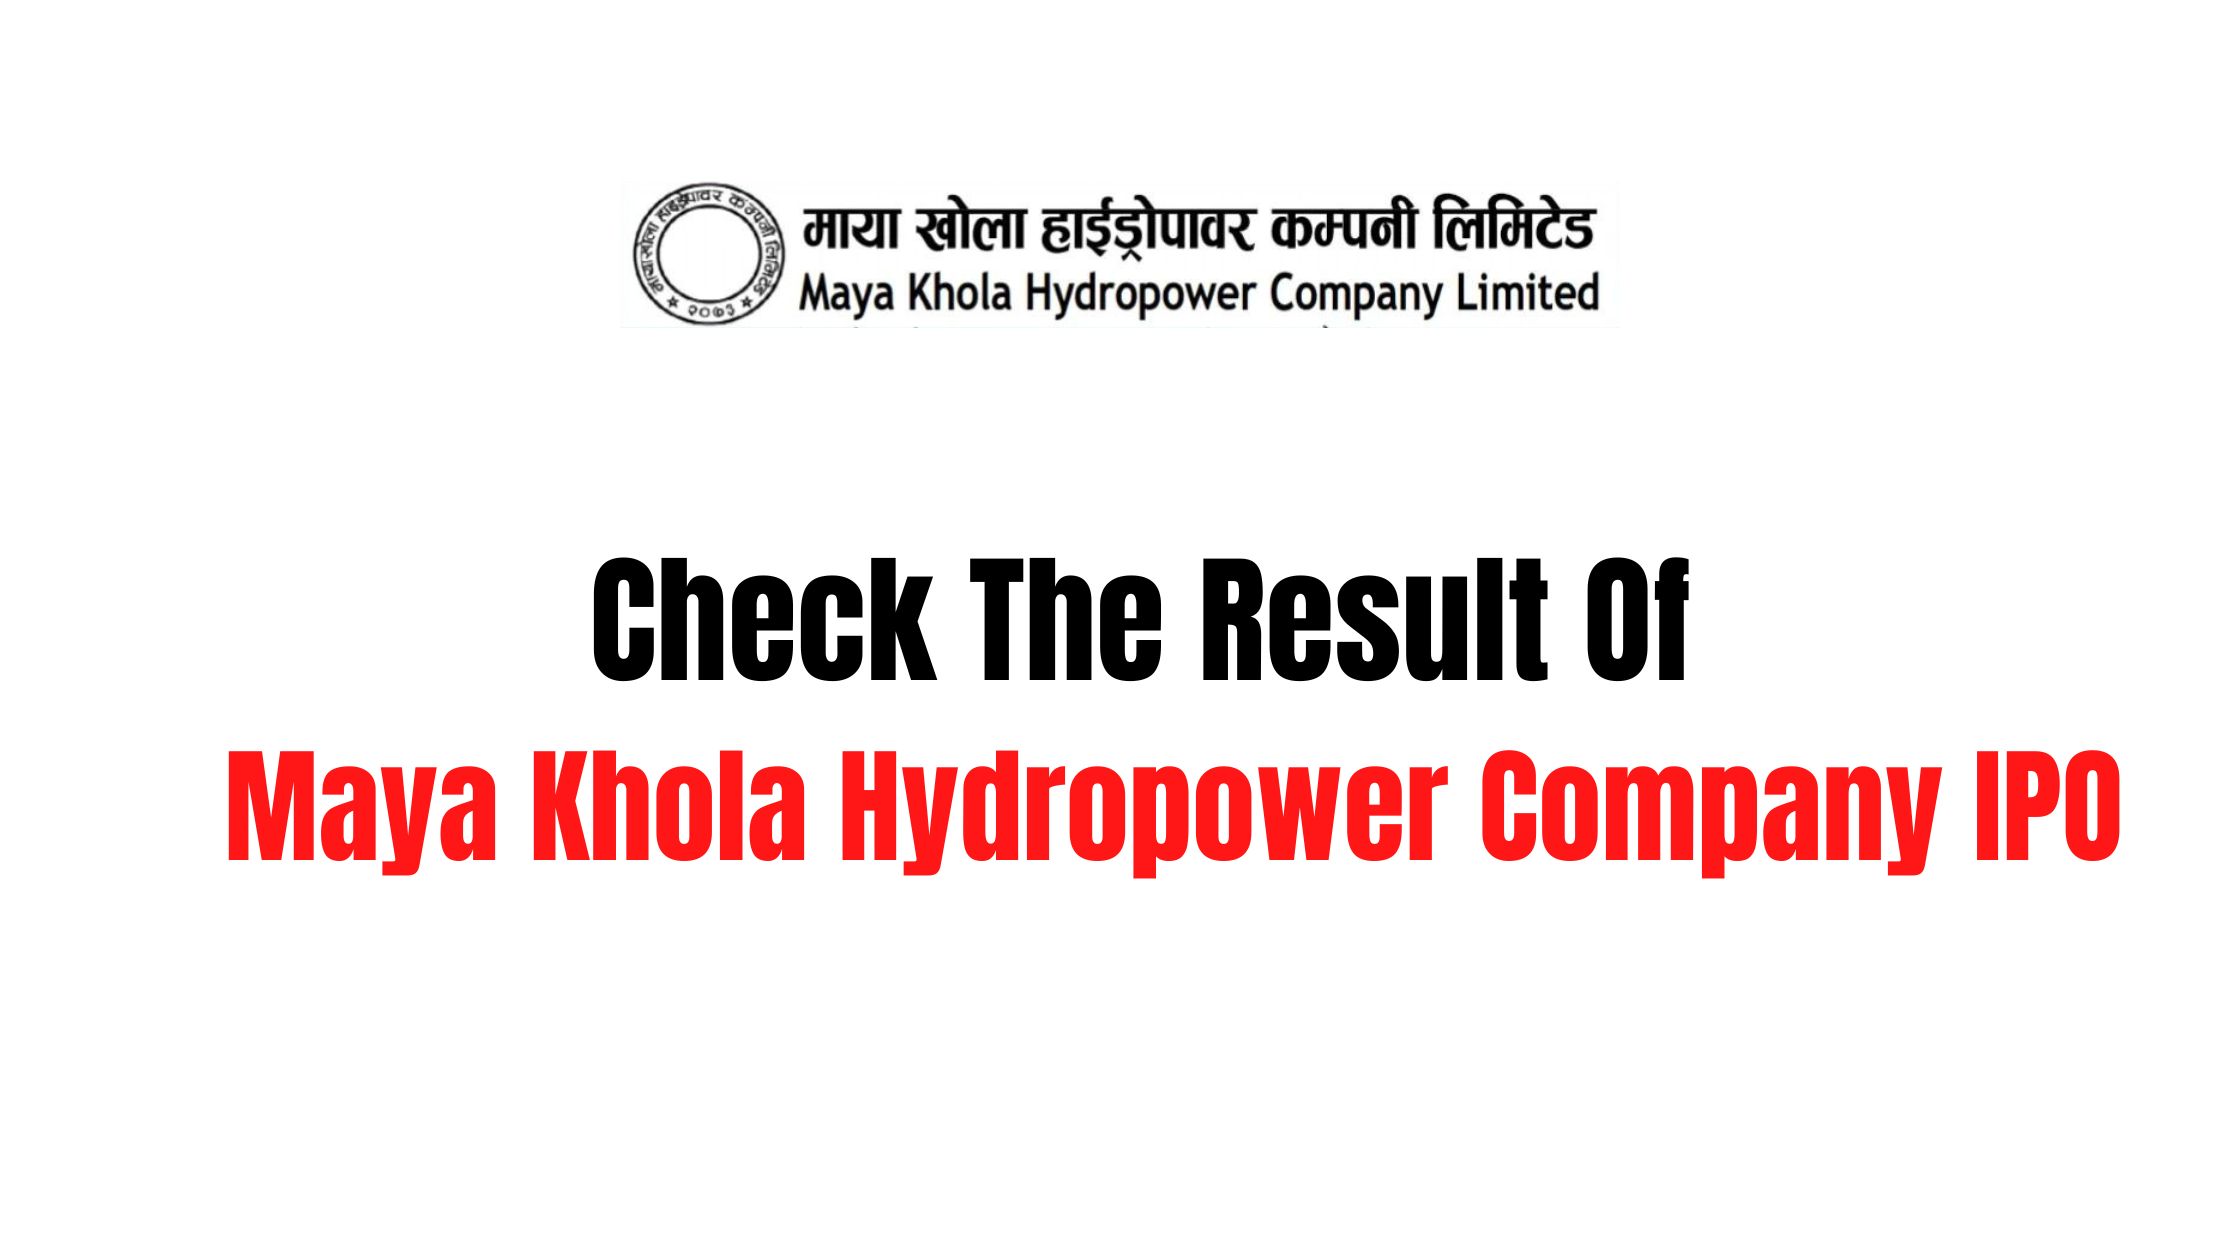 Check The Result Of Maya Khola Hydropower Company IPO